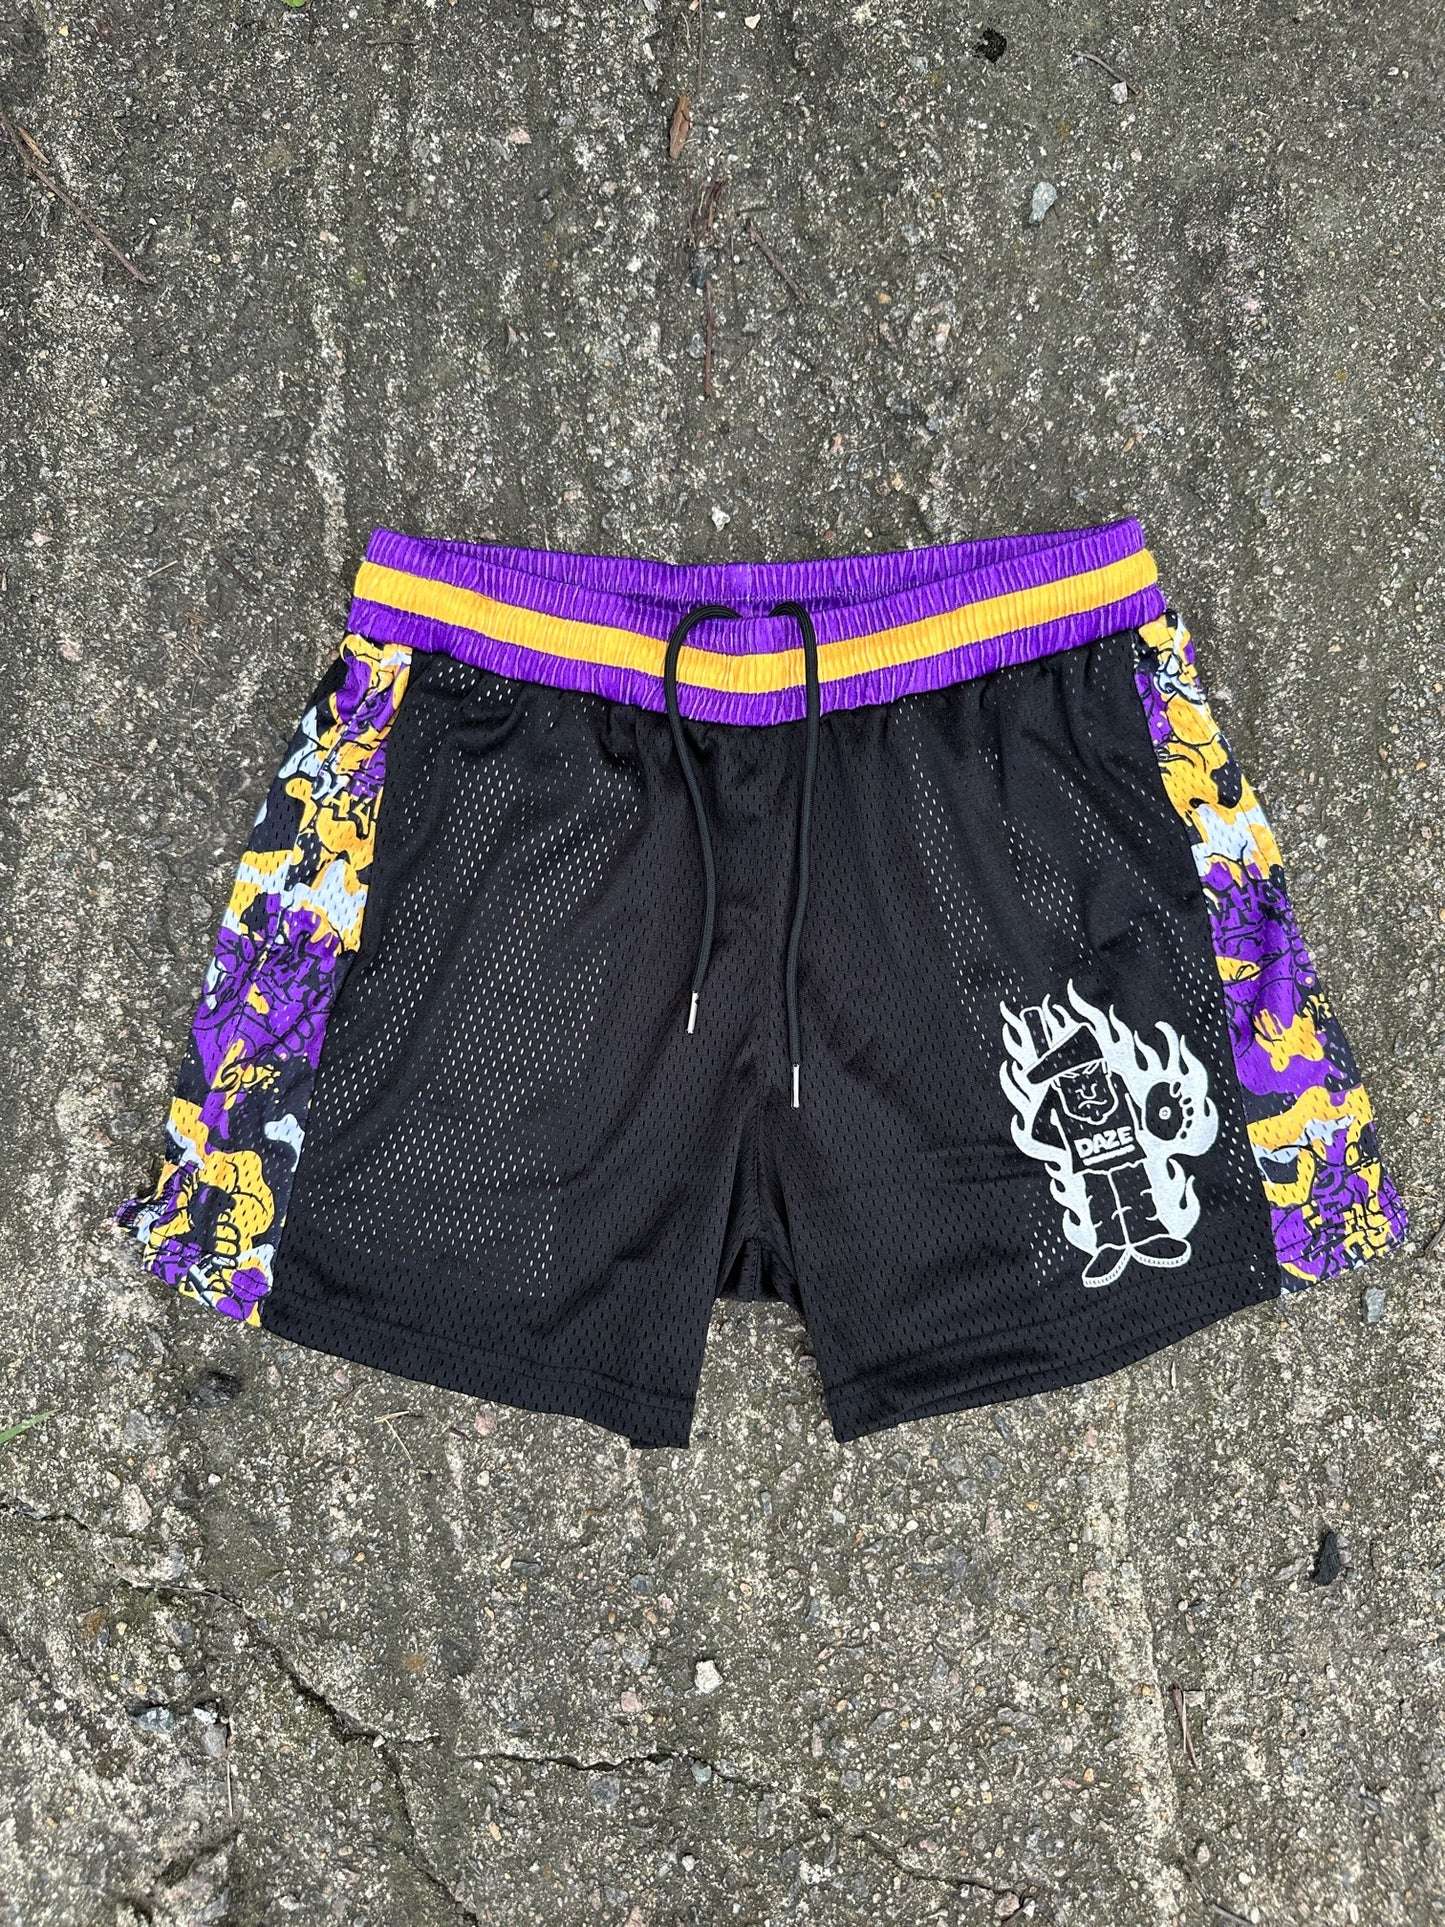 DAZE Embroidered Shorts